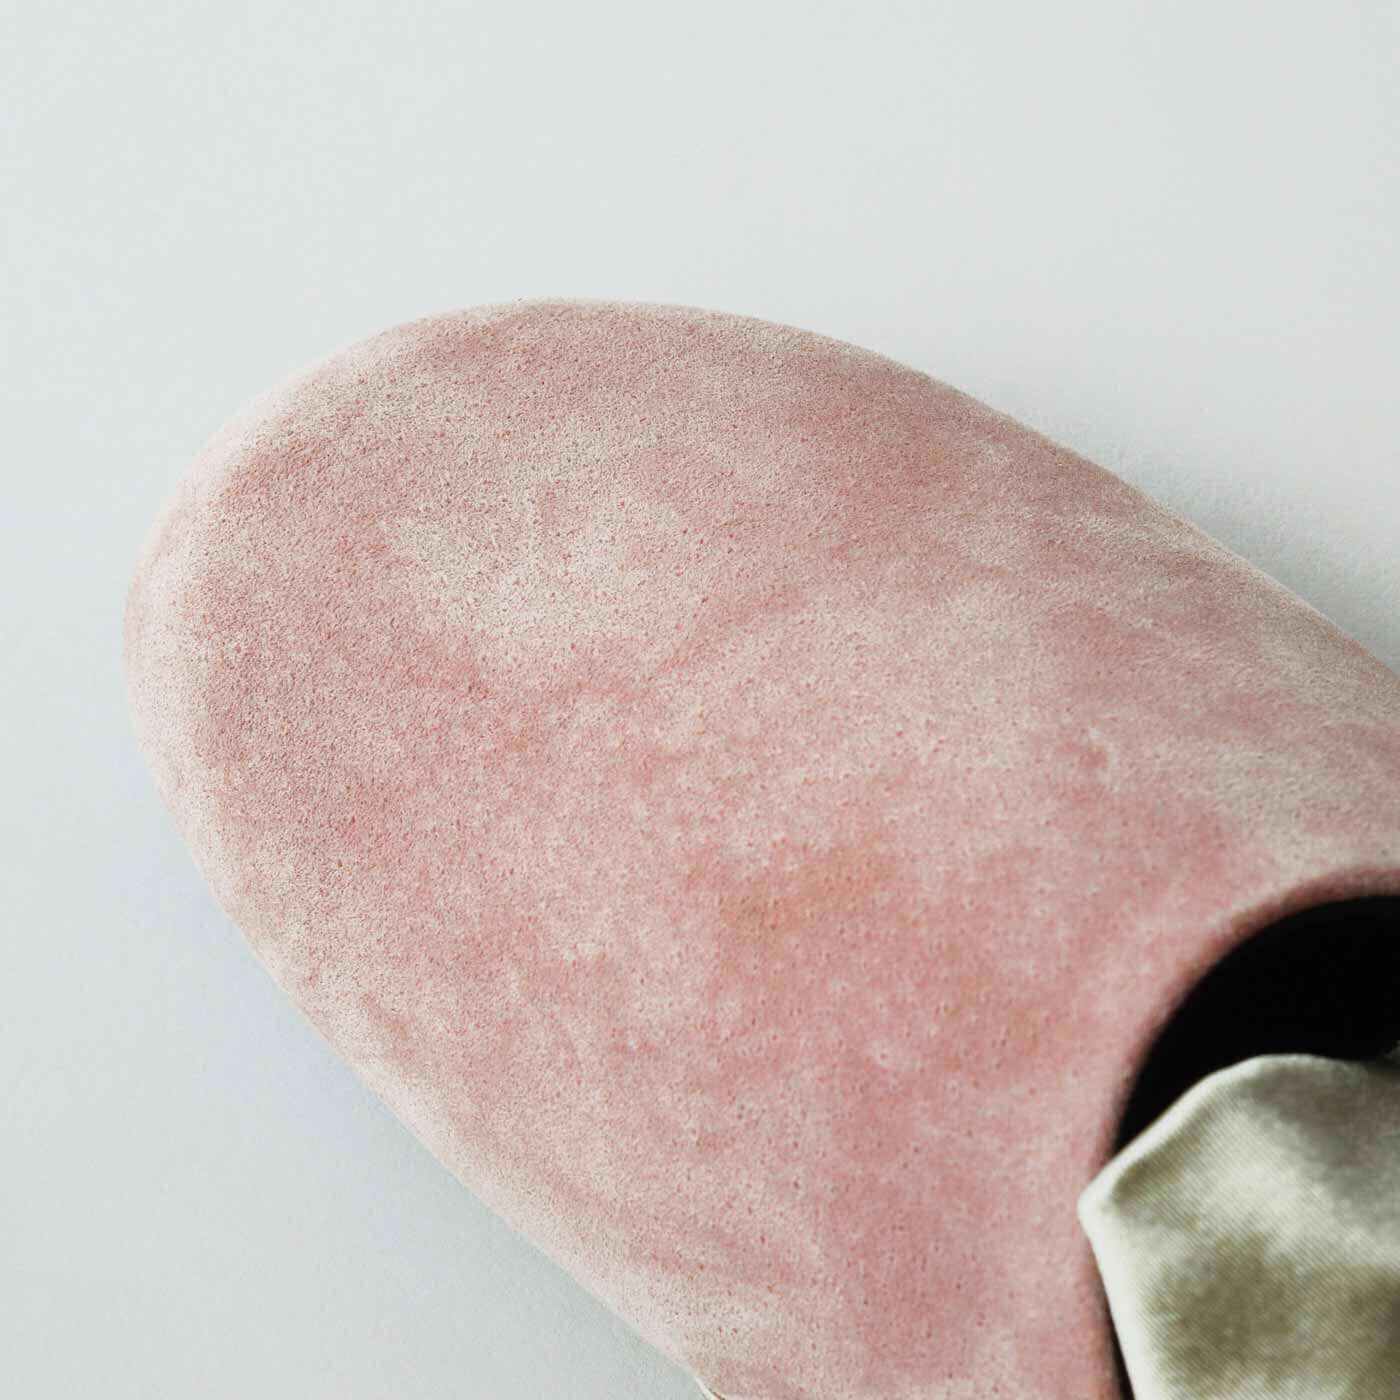 ＆Stories|長田の靴職人が作った 職人本革のパニーニサボシューズ〈ストロベリー〉|独特の表情がある豚革スウェードを使用。